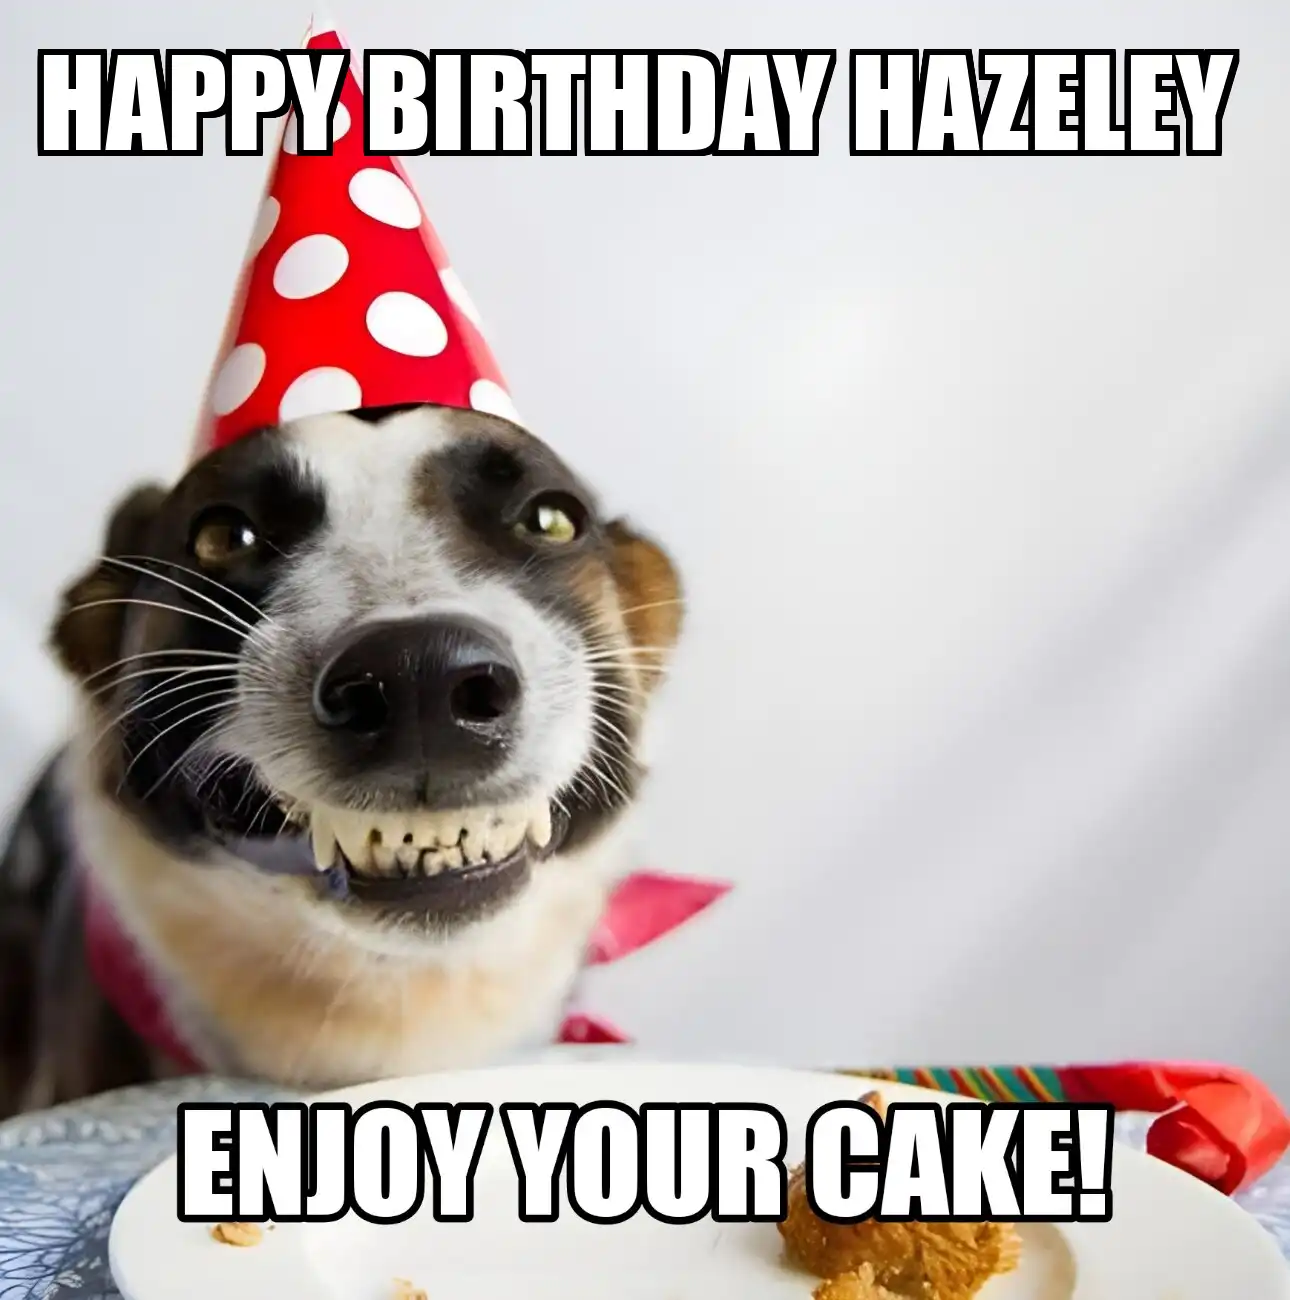 Happy Birthday Hazeley Enjoy Your Cake Dog Meme